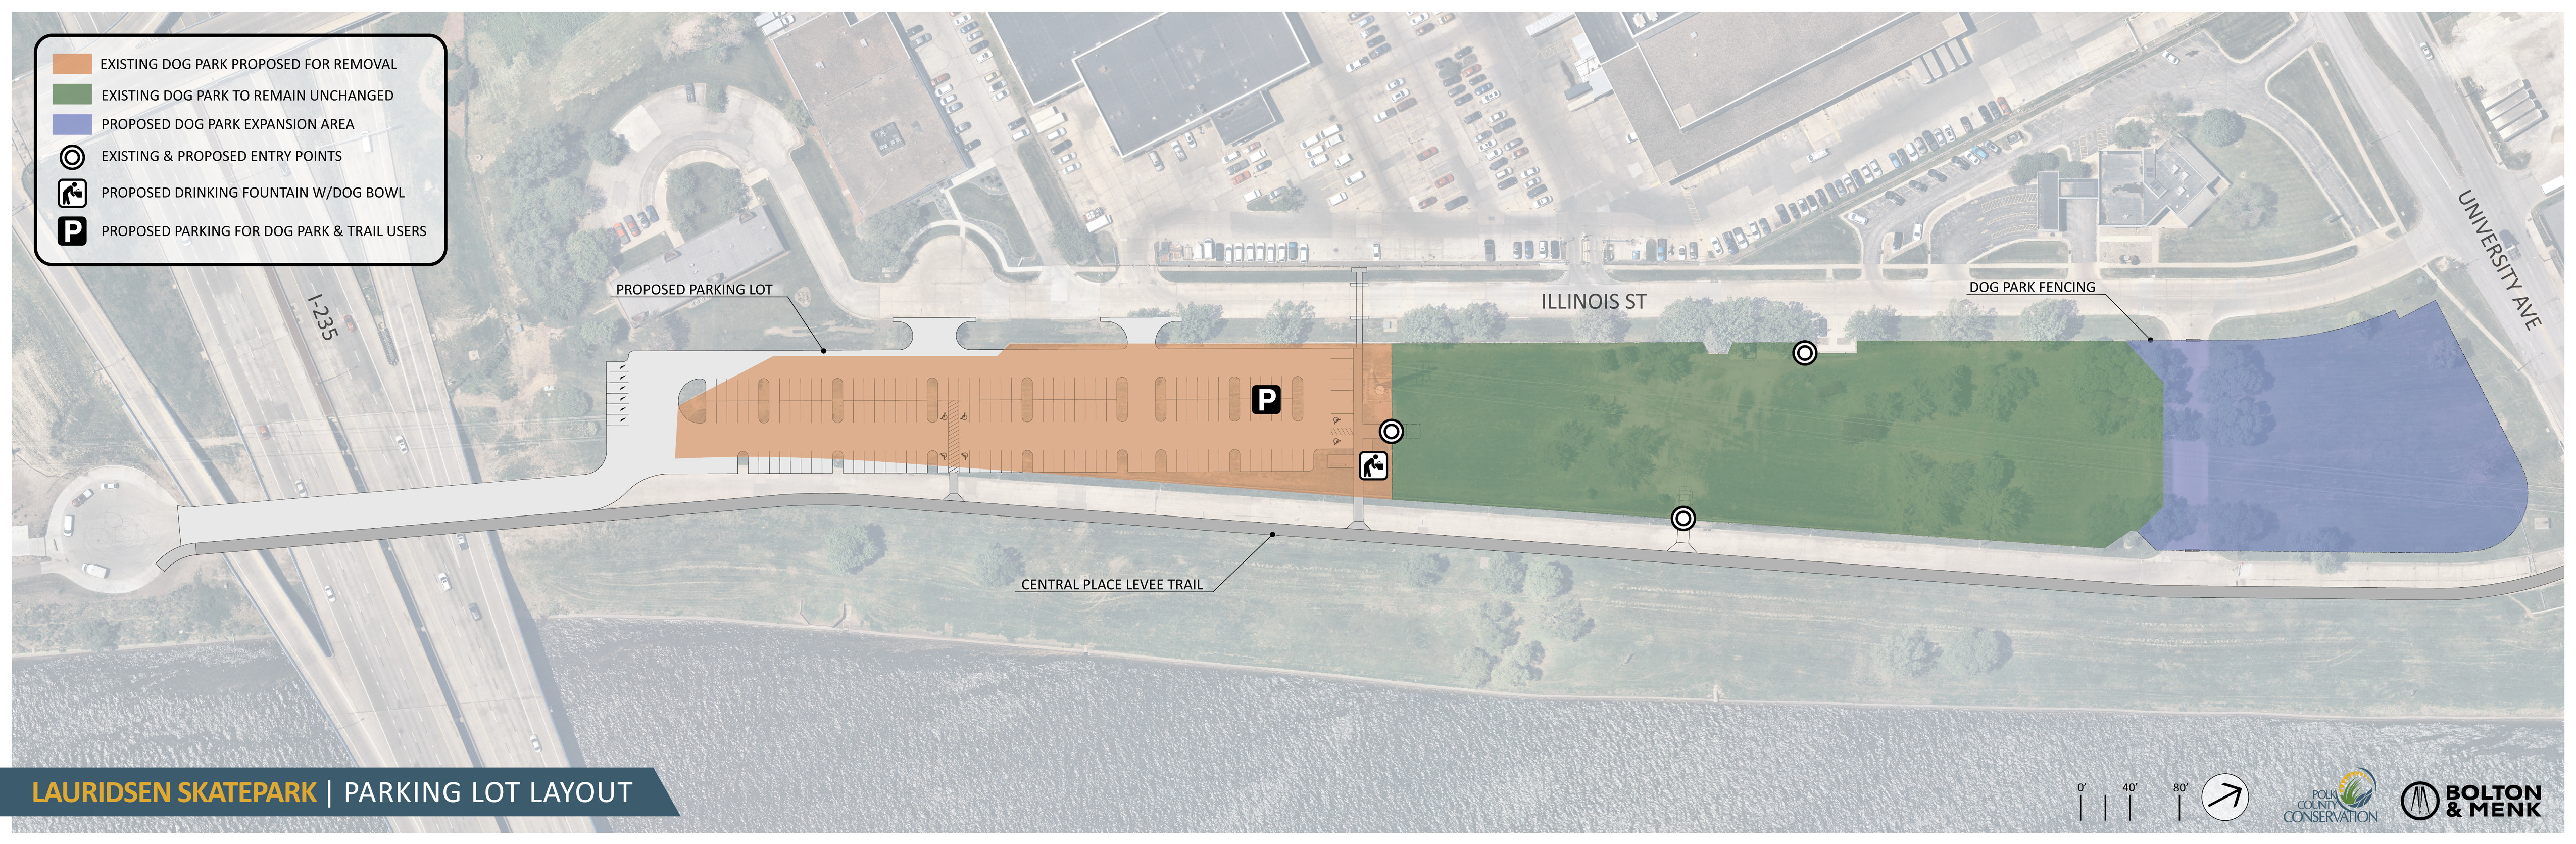 Seeking public input on updates to Riverwalk Dog Park, new parking lot.